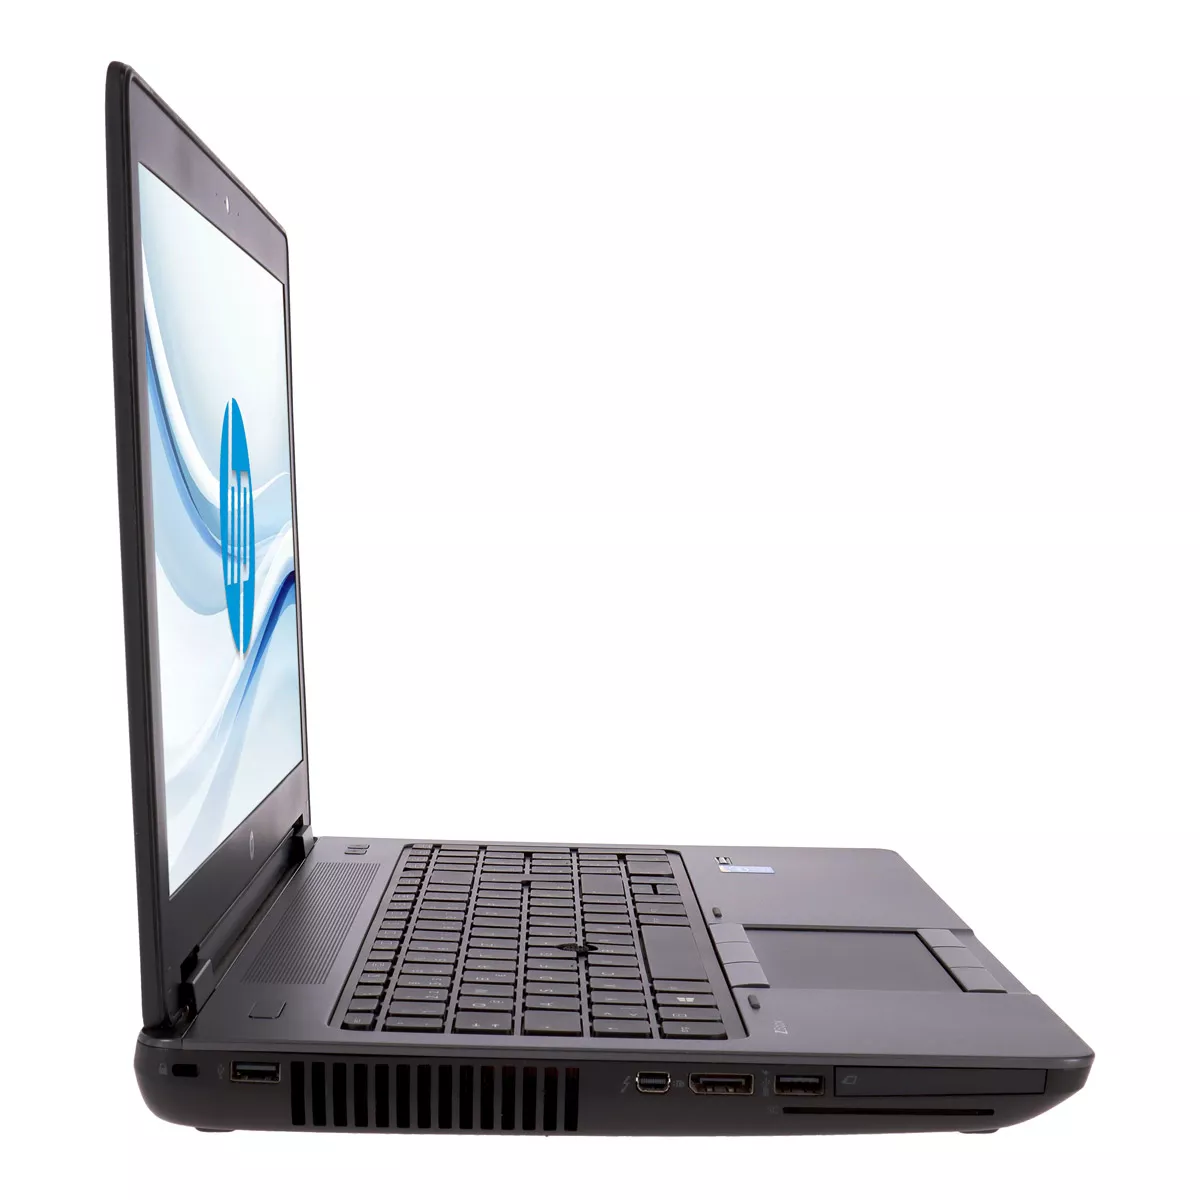 HP ZBook 15 G2 Core i7 4810MQ Full-HD nVidia Quadro K2100M 500 GB SSD Webcam